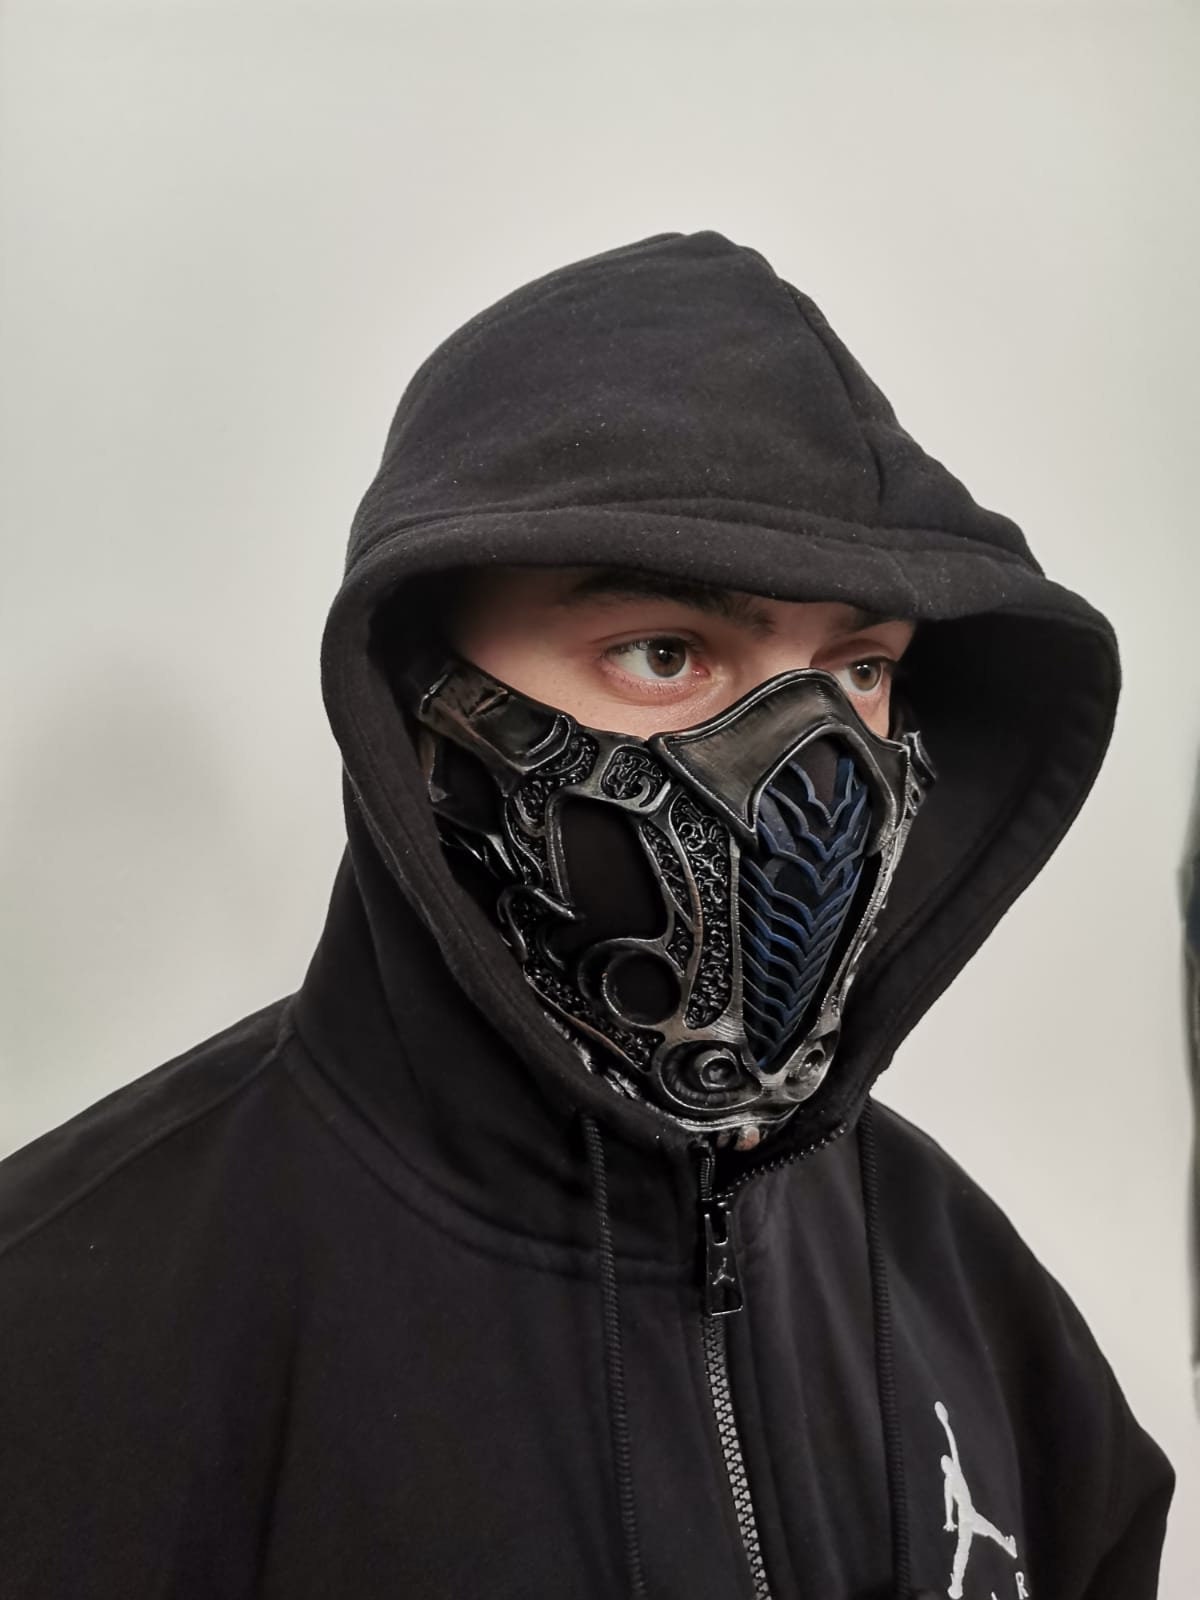 Sub-zero Mask Mortal Kombat 2021 -